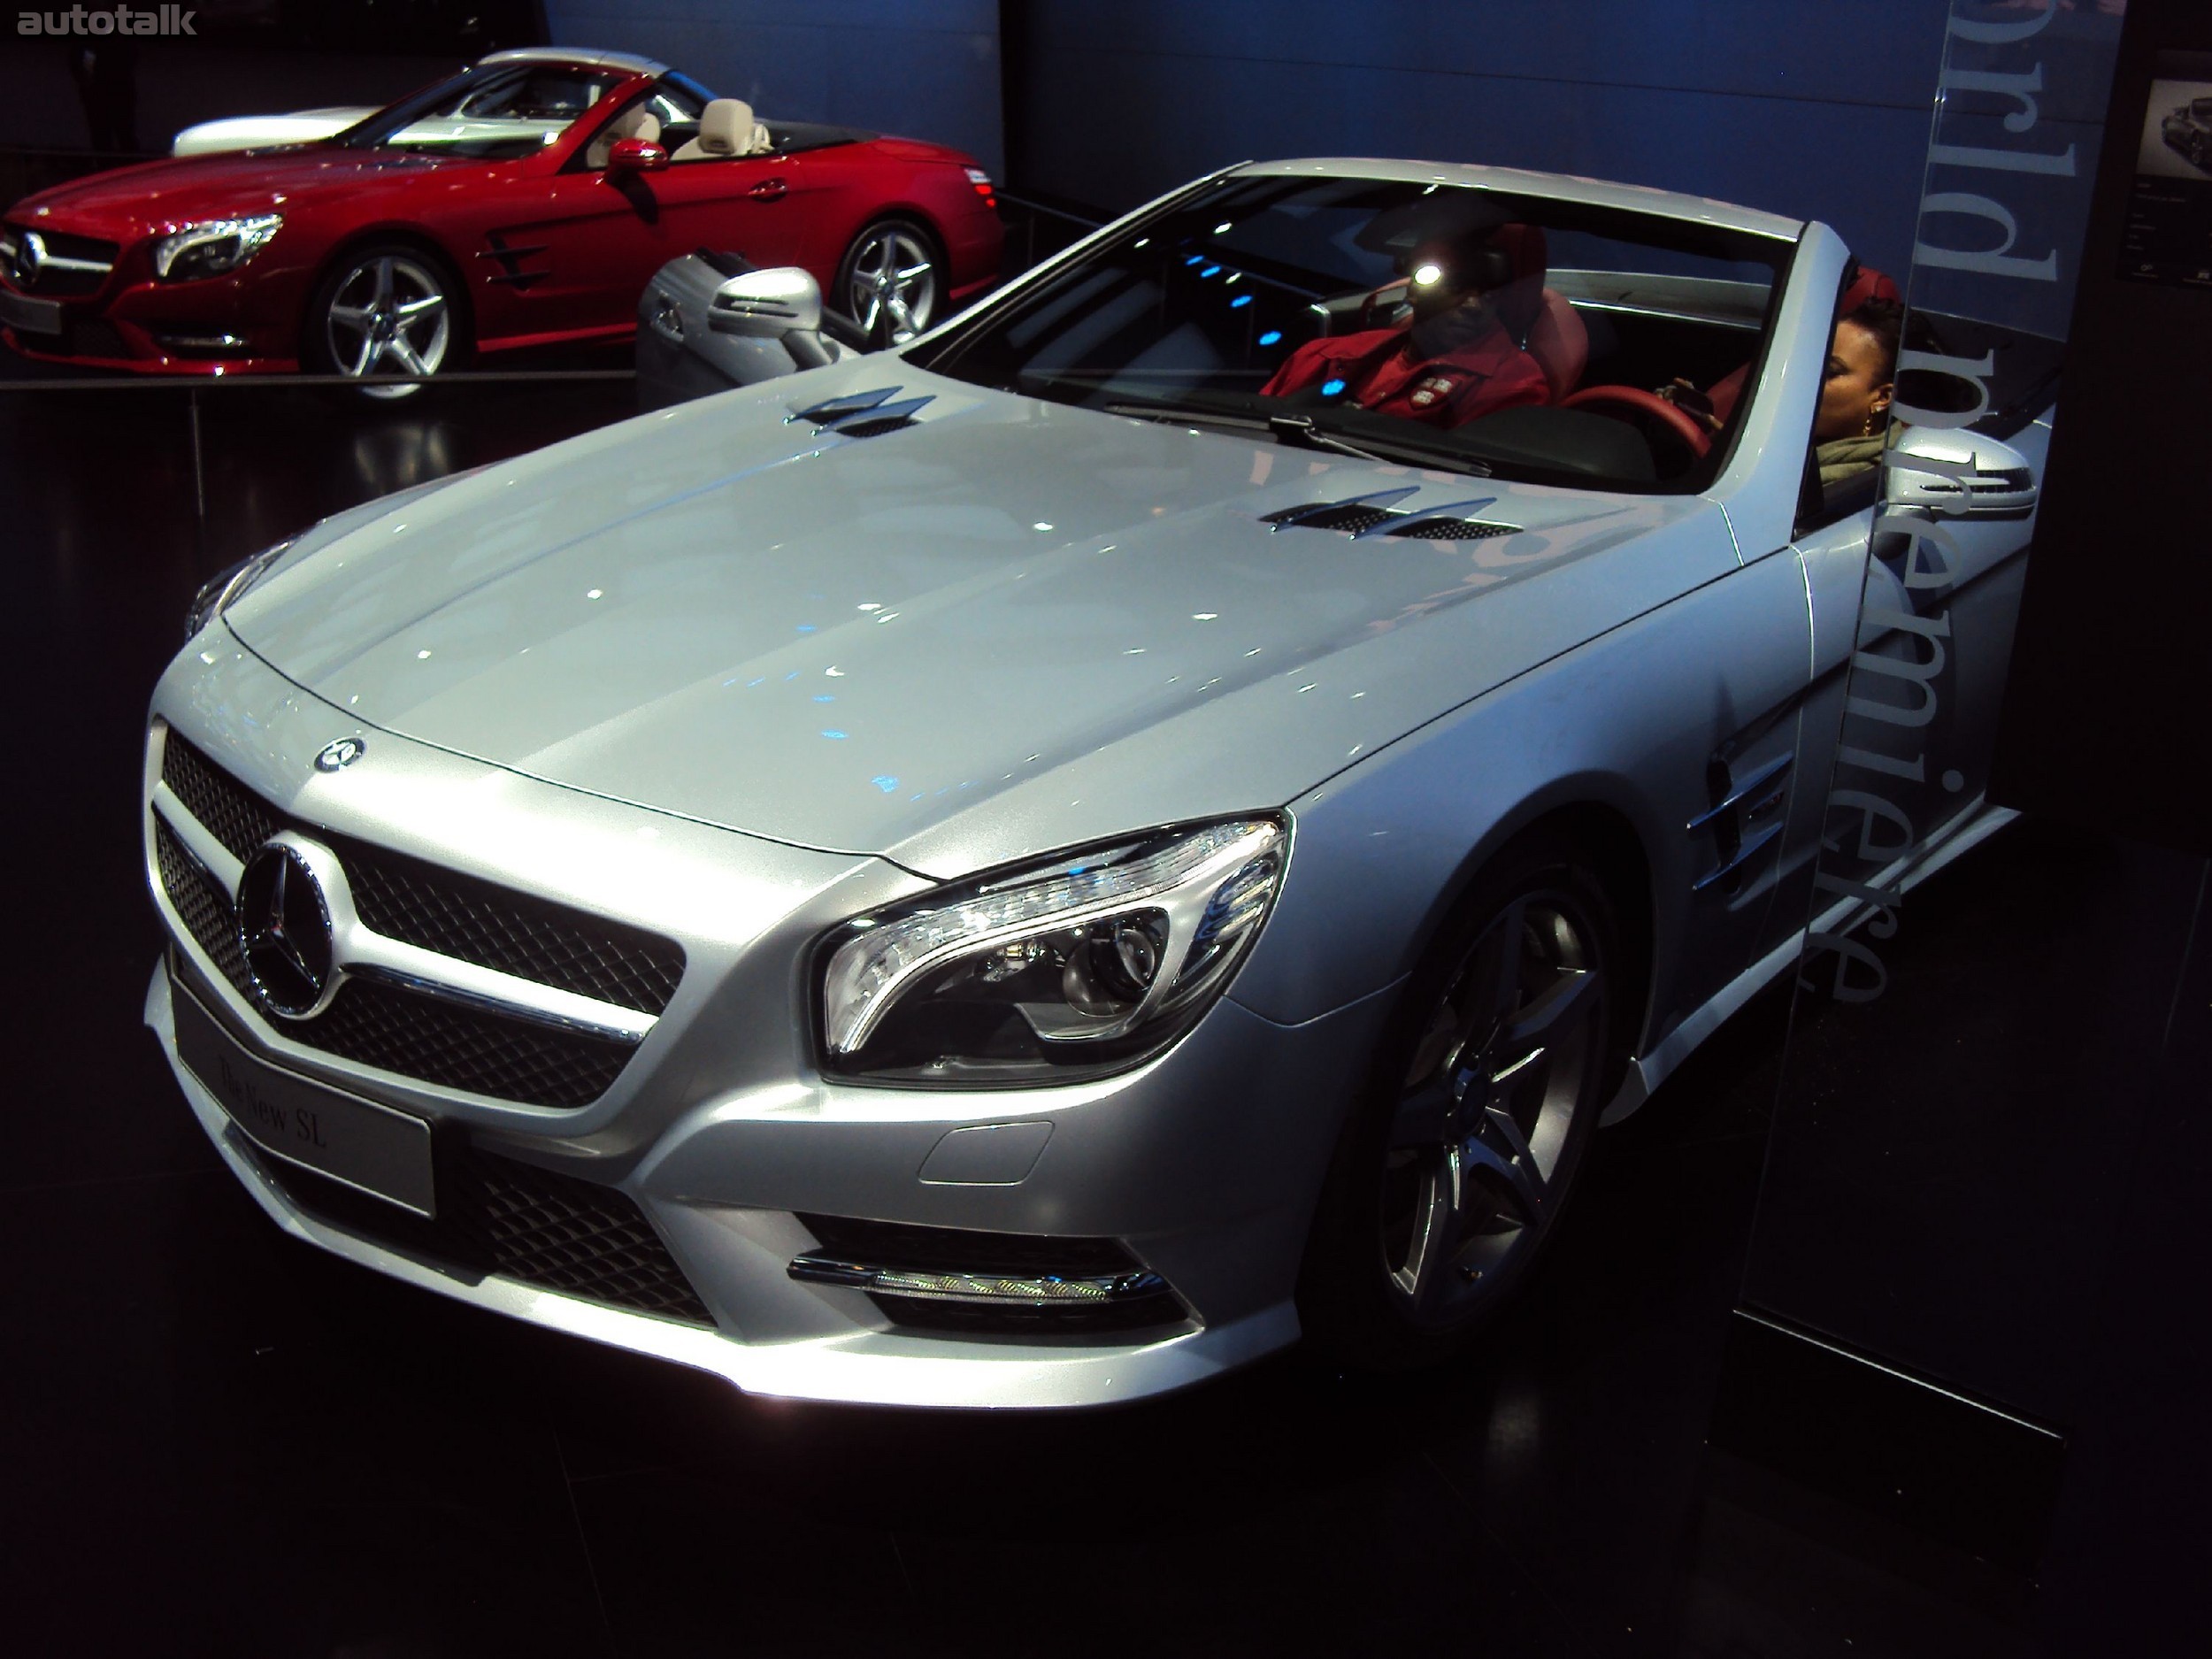 Mercedes-Benz at 2012 NAIAS